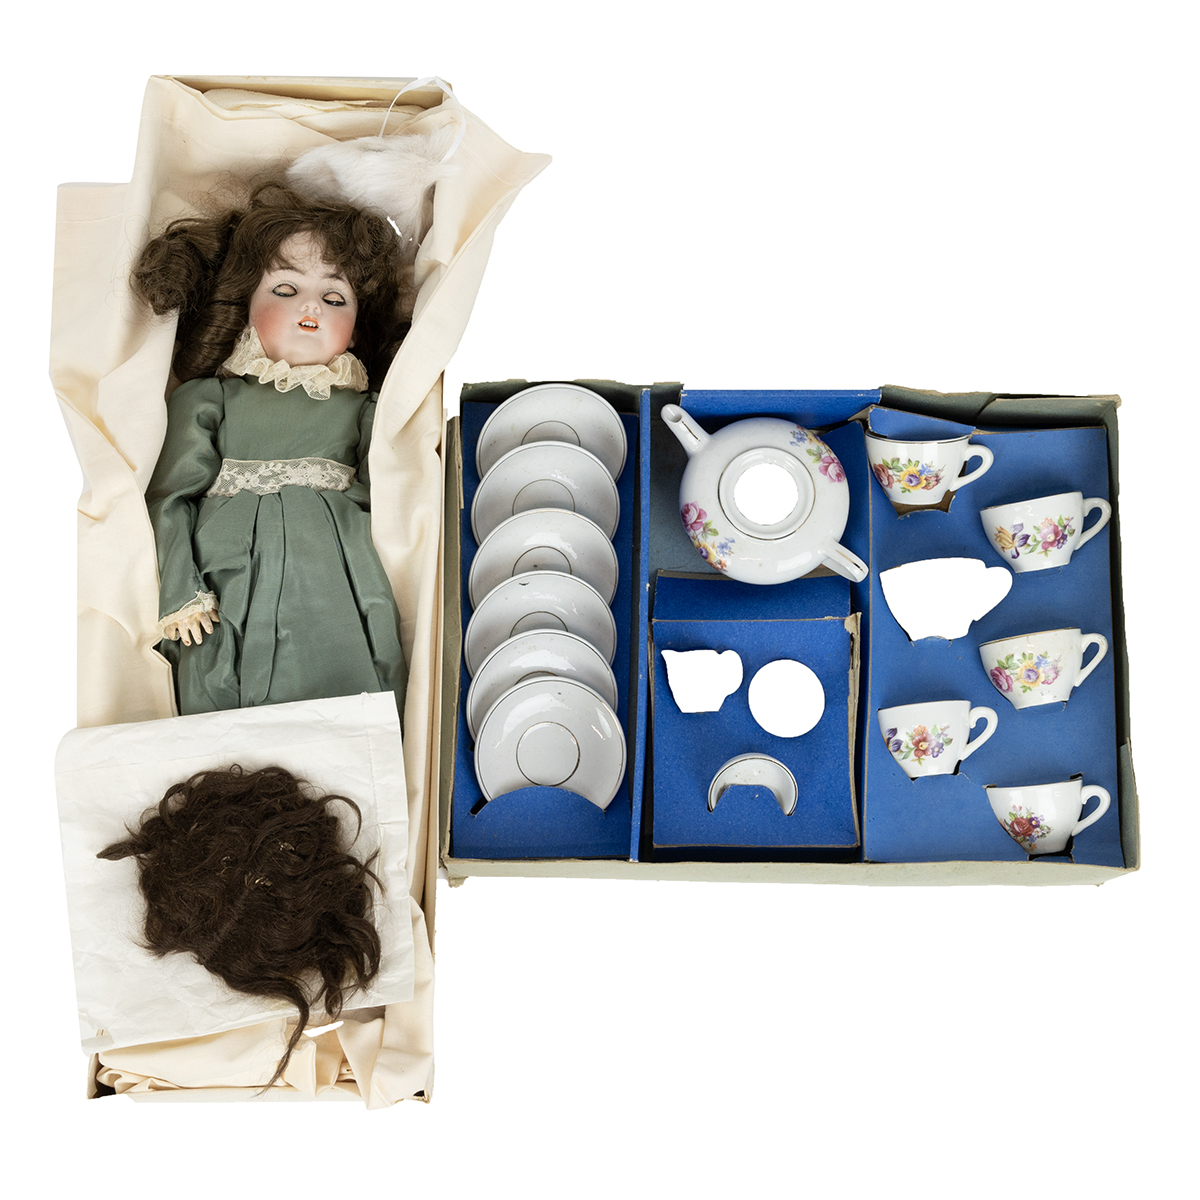 Simon & Halbig doll, the porcelain head stamped "1078, Simon & Halbig, 6 1/2", along with a boxed...